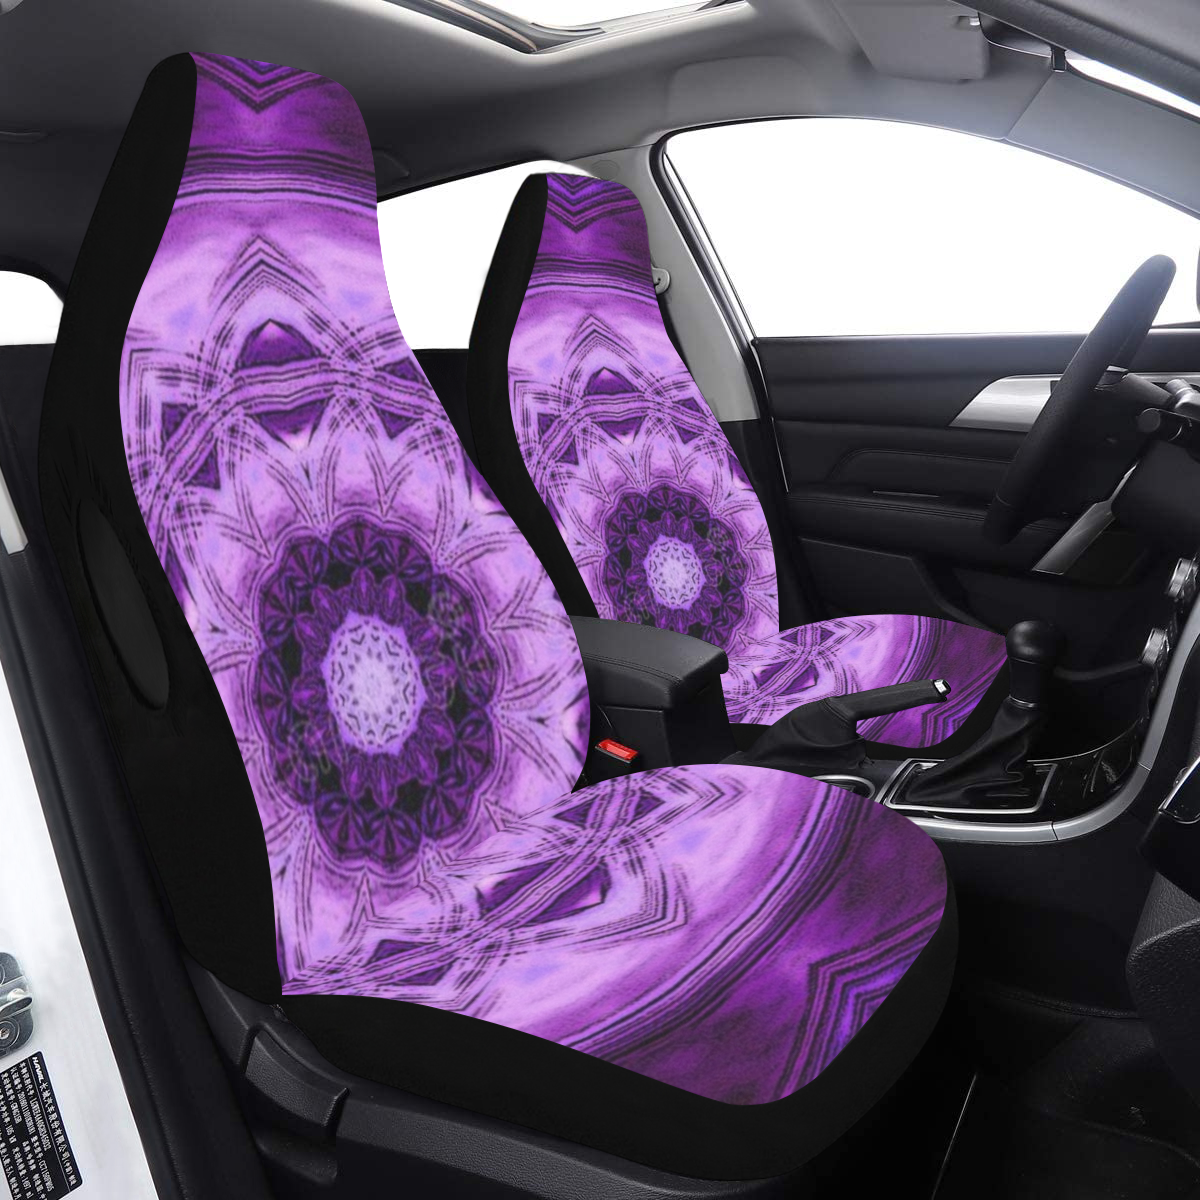 MANDALA PURPLE POWER Car Seat Cover Airbag Compatible (Set of 2)